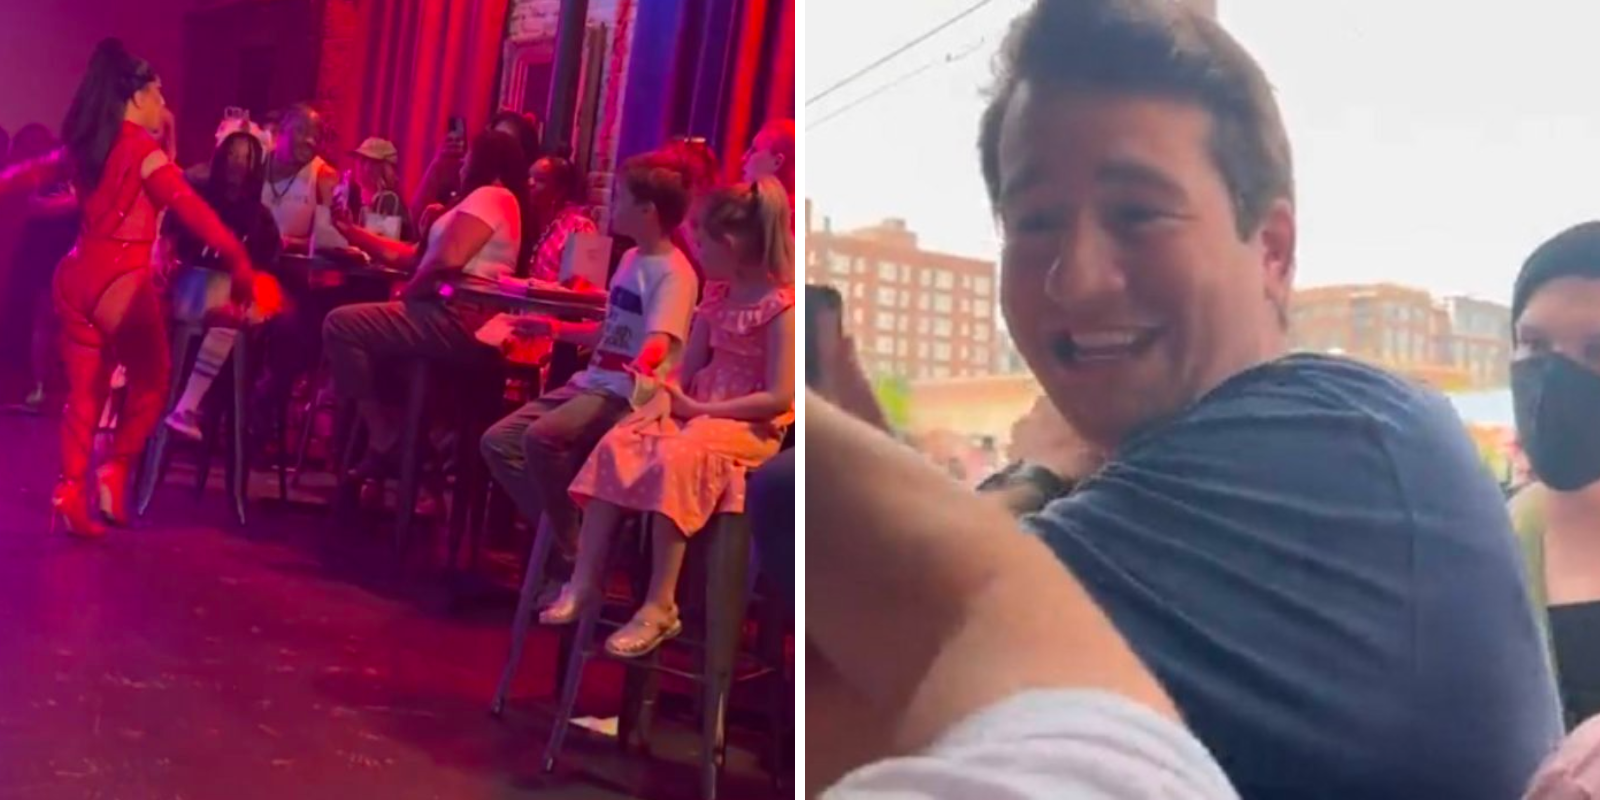 BREAKING: Shocking scenes emerge from ‘child-friendly’ drag show in Dallas gay bar